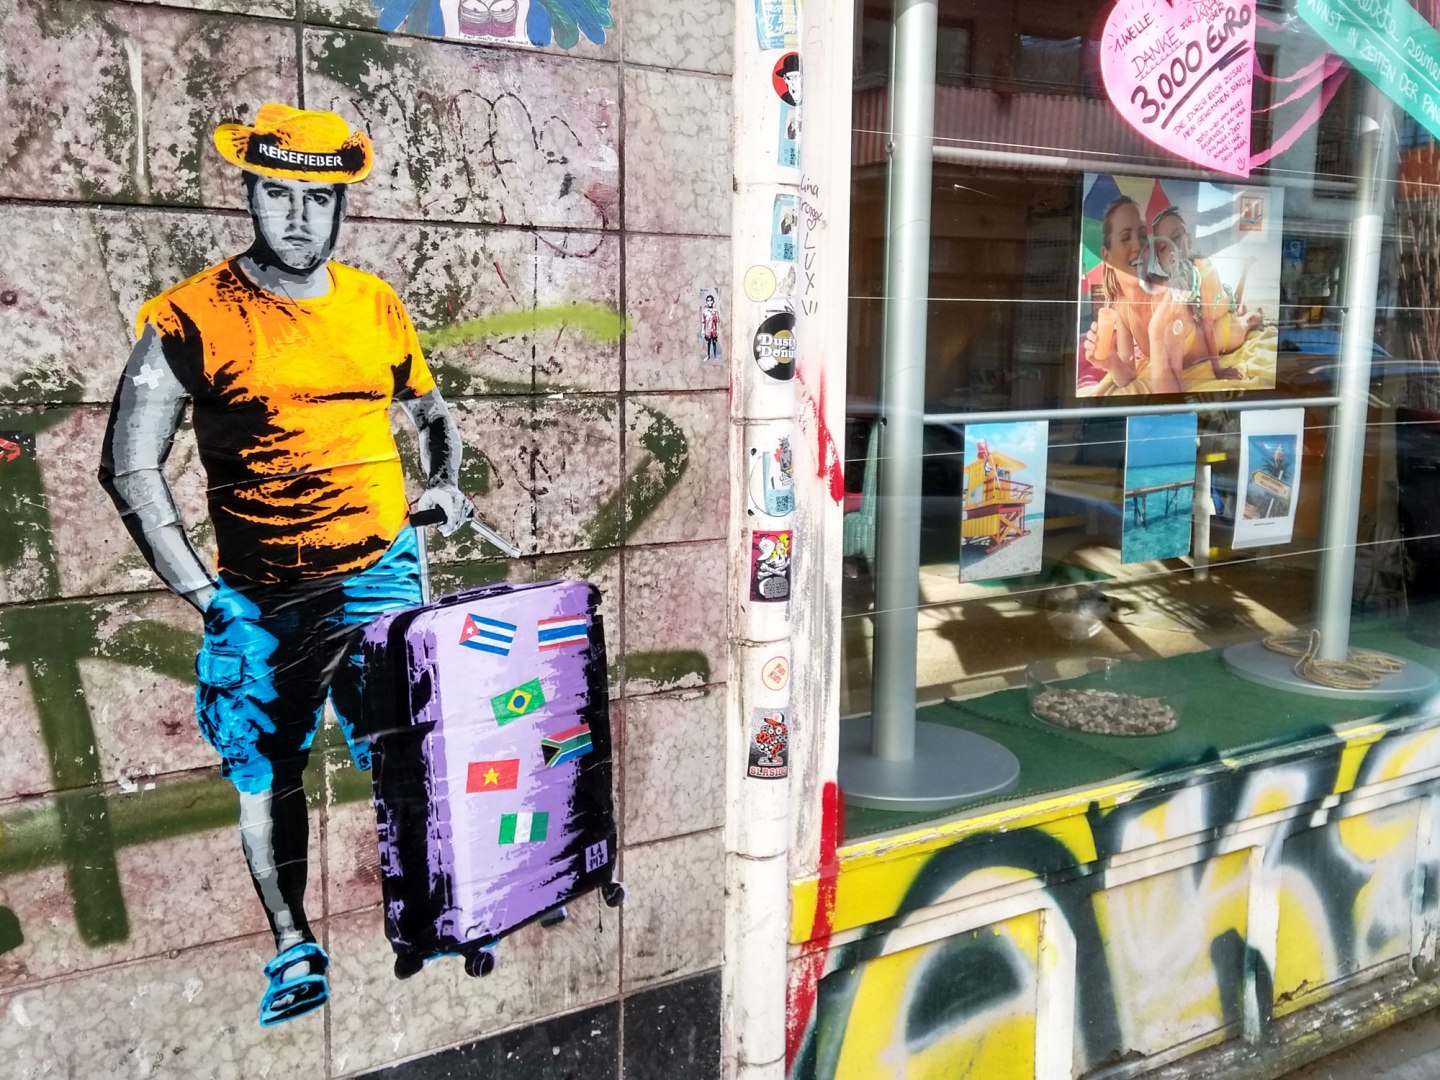 Reisefieber: LAPIZ’s New Street Artwork That Raises Questions